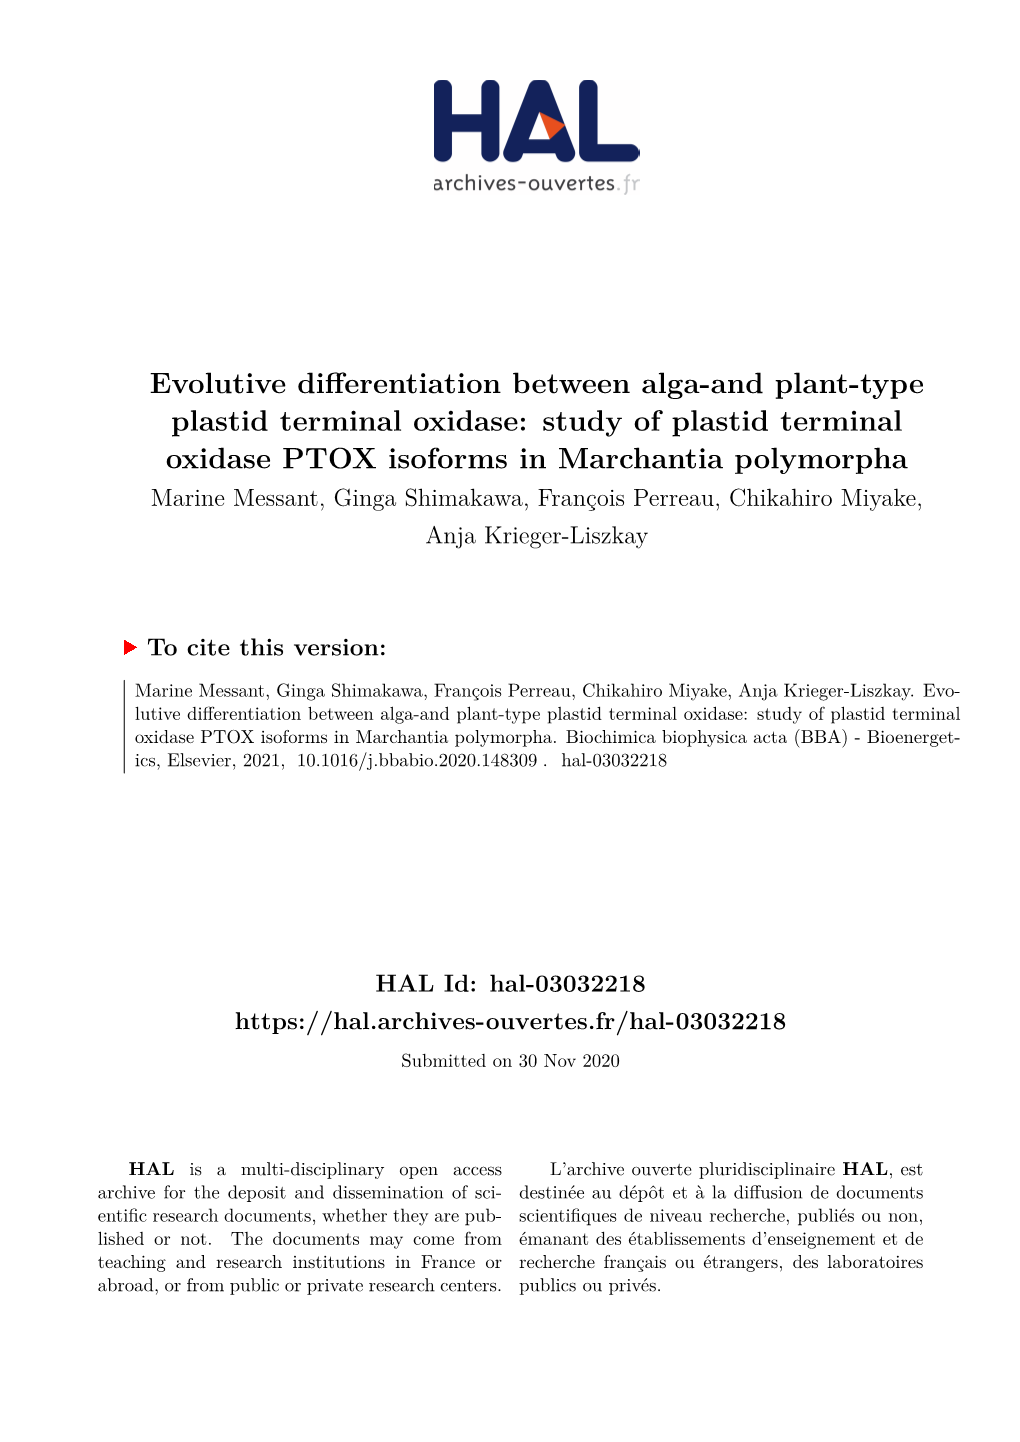 Study of Plastid Terminal Oxidase PTOX Isoforms in Marchantia Polymorpha Marine Messant, Ginga Shimakawa, François Perreau, Chikahiro Miyake, Anja Krieger-Liszkay